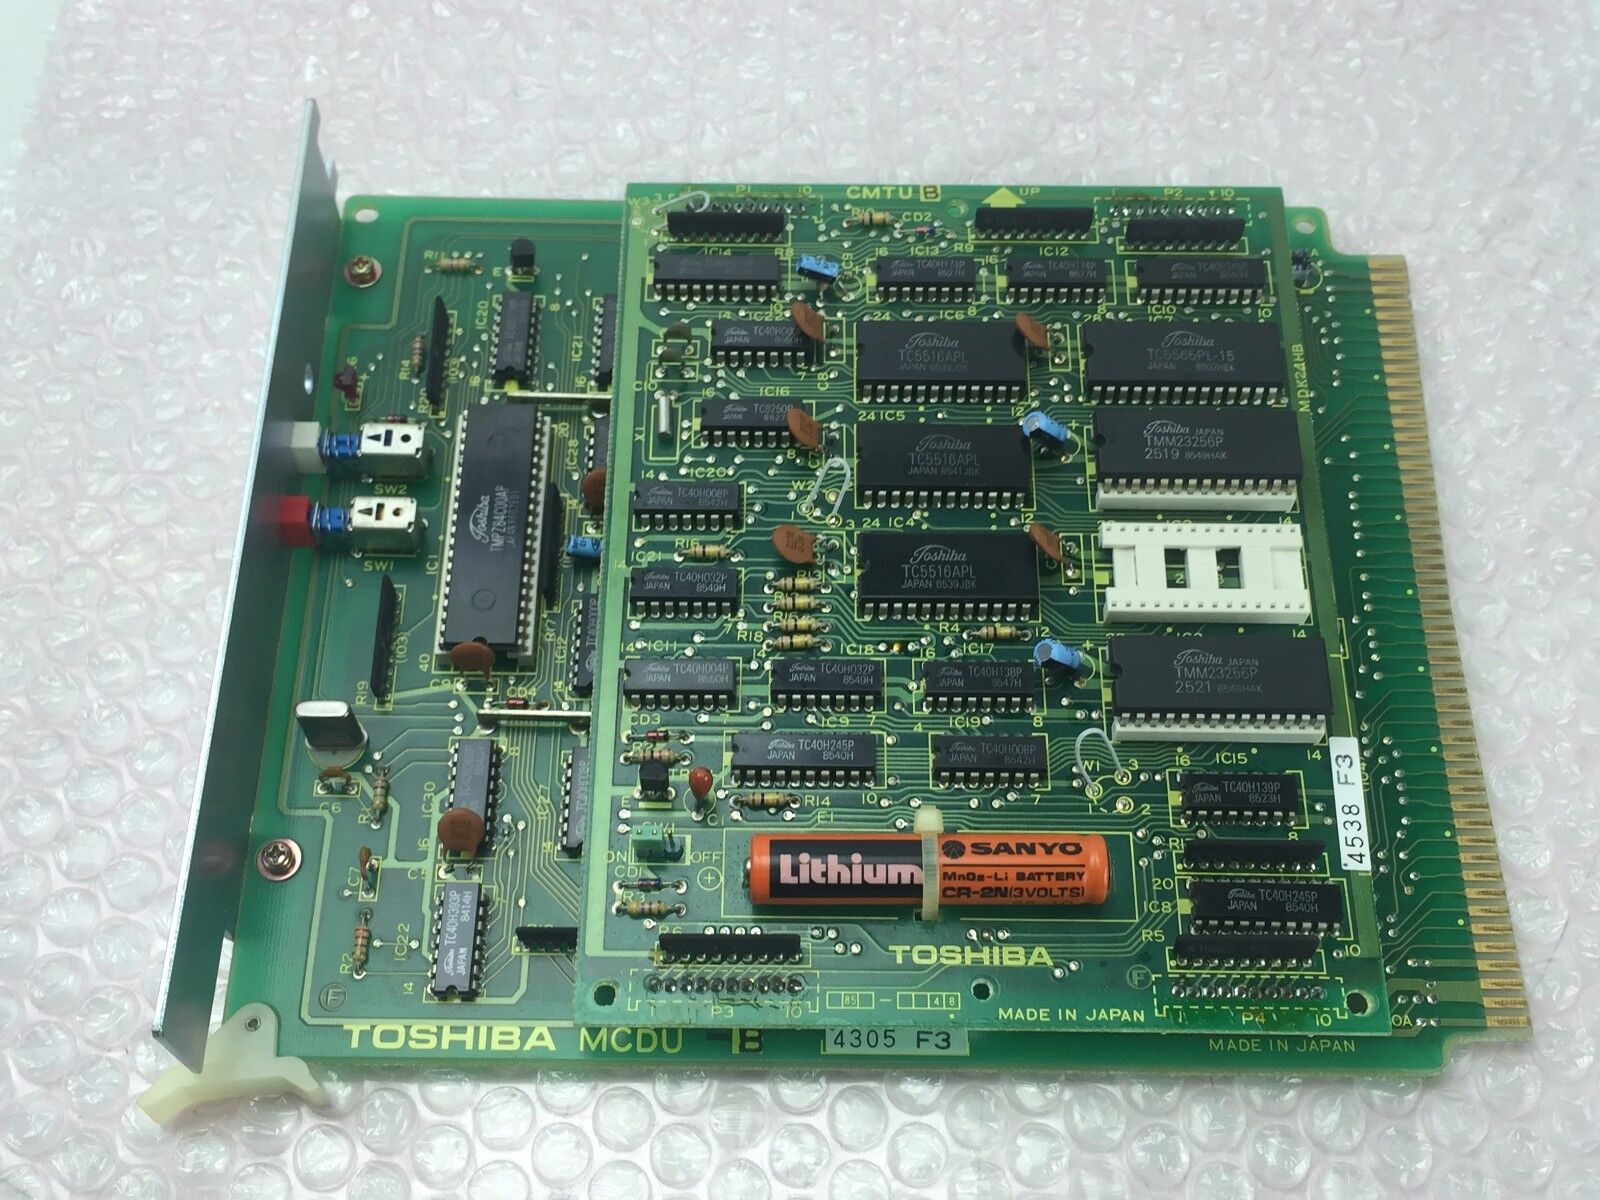 Toshiba Strata VI Card - MCDU - Processor Card for Display Phones